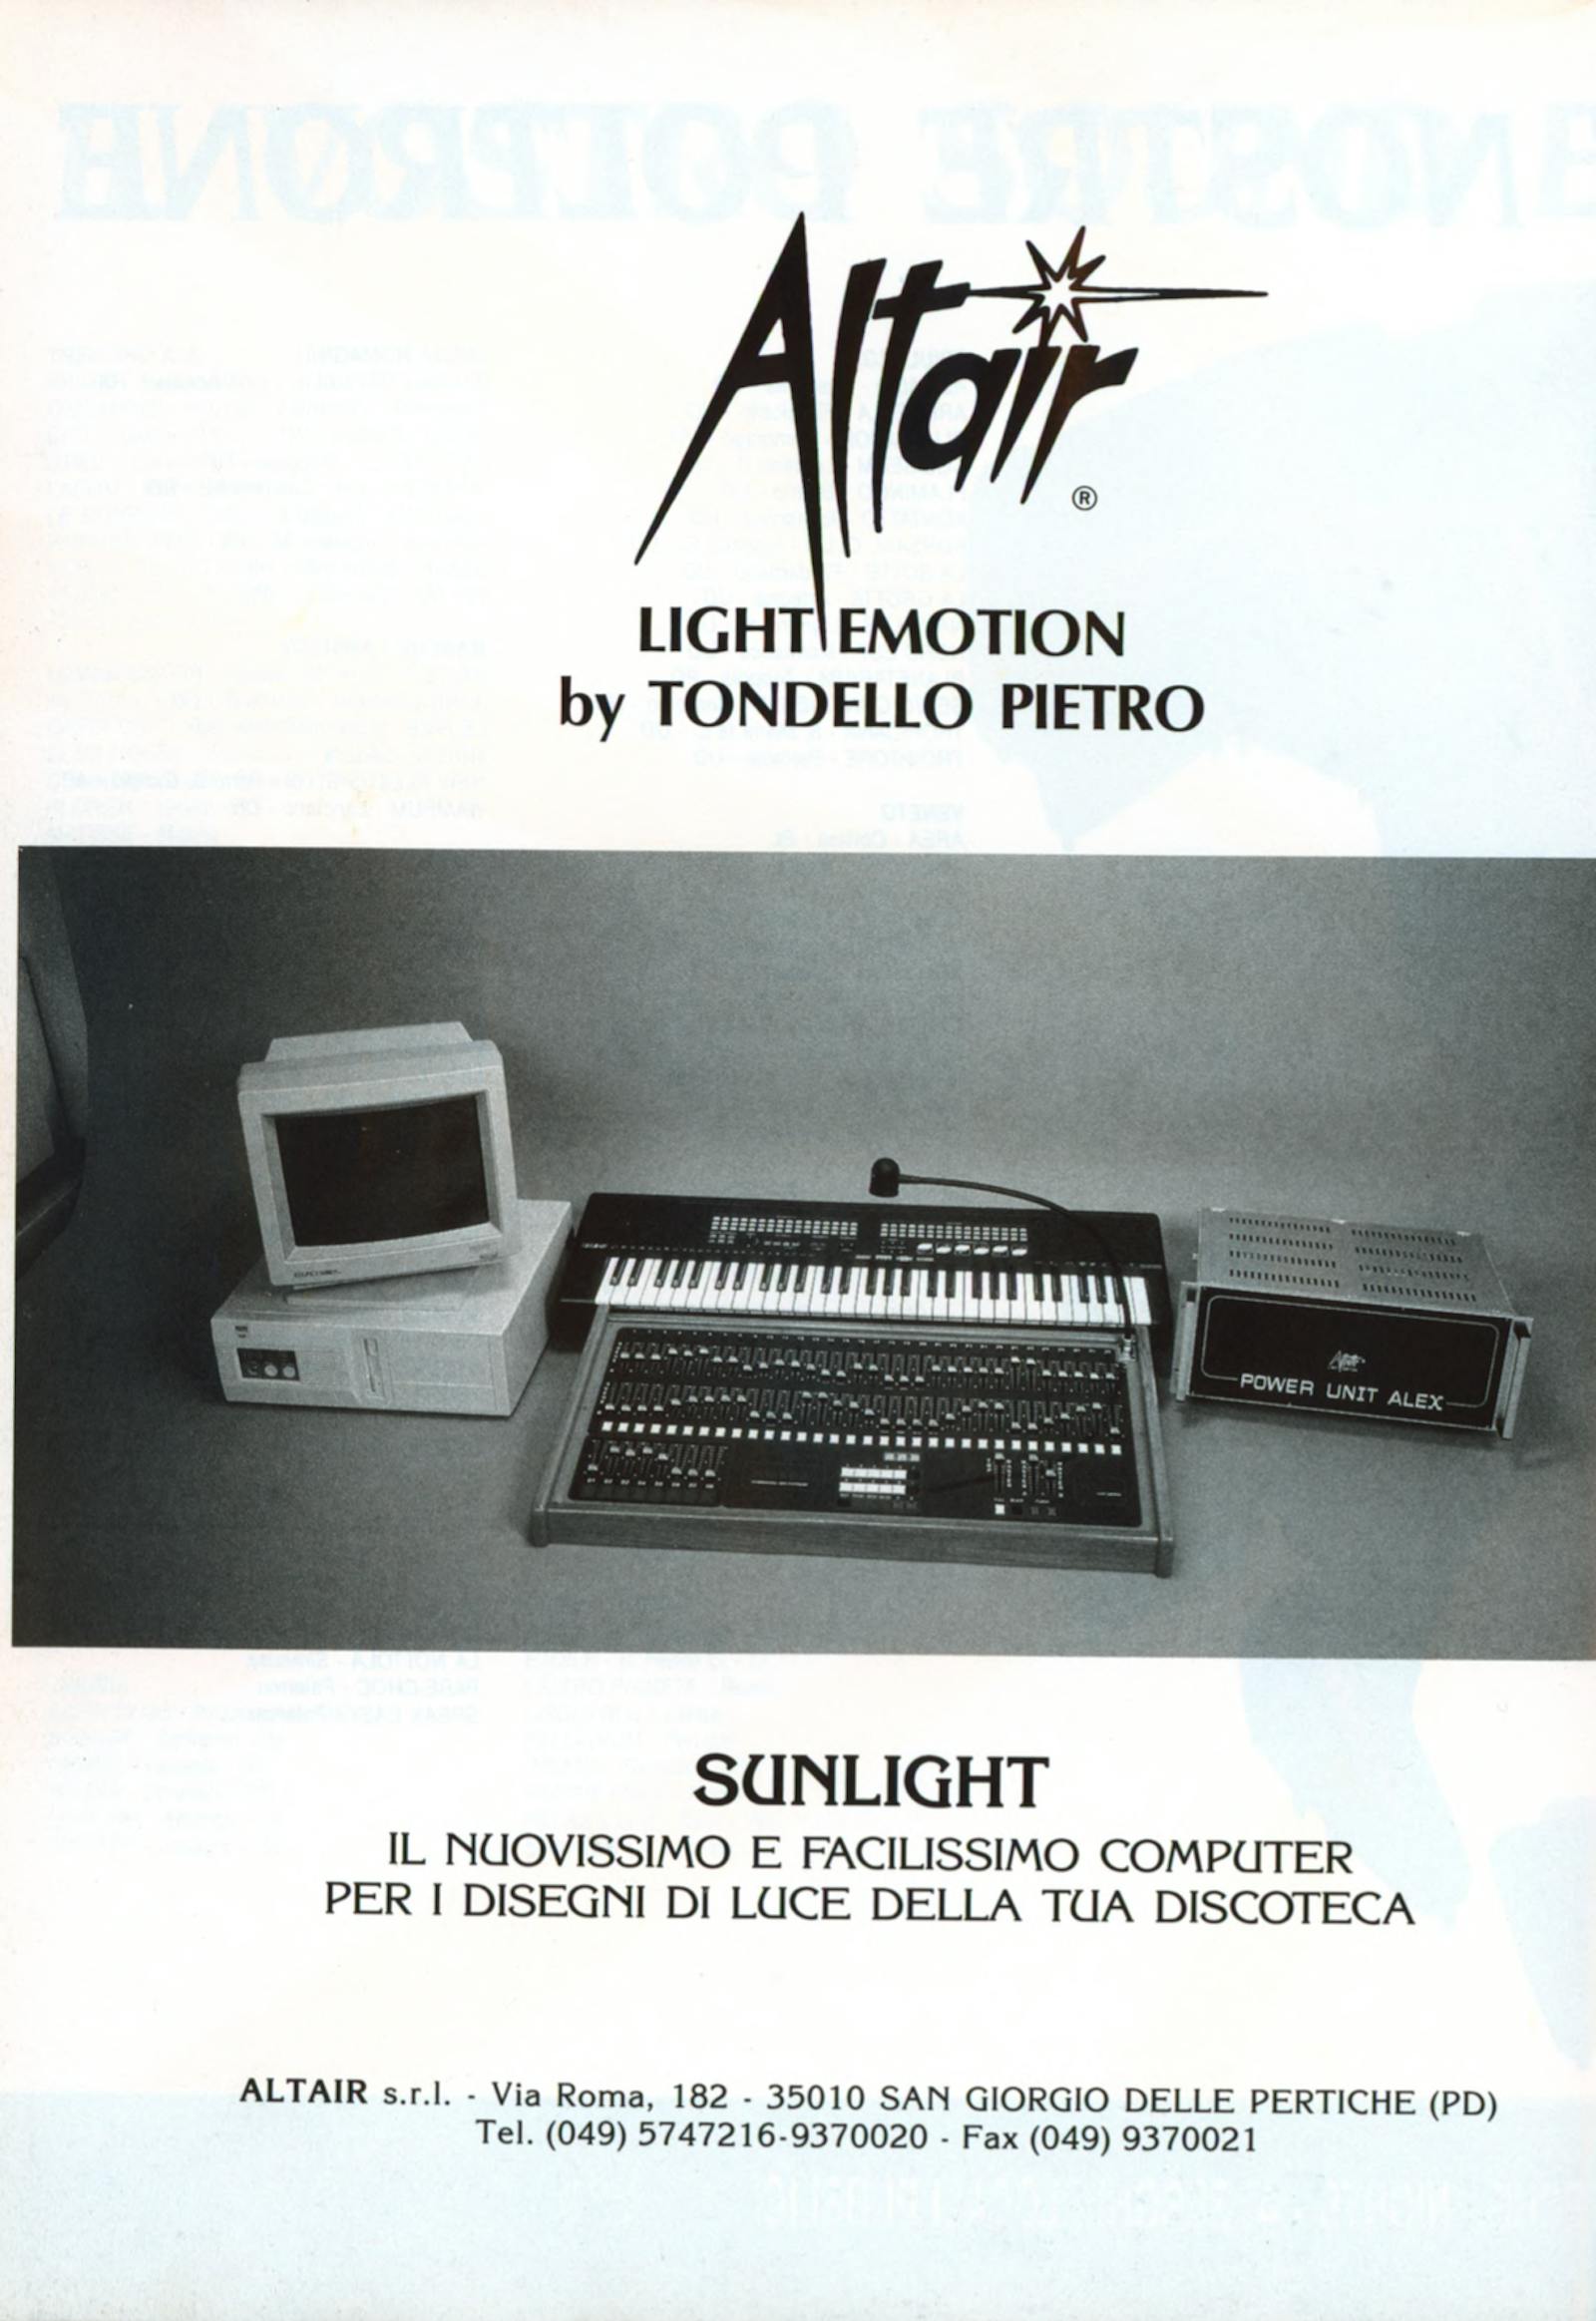 Pubblicità Altair: Sunlight